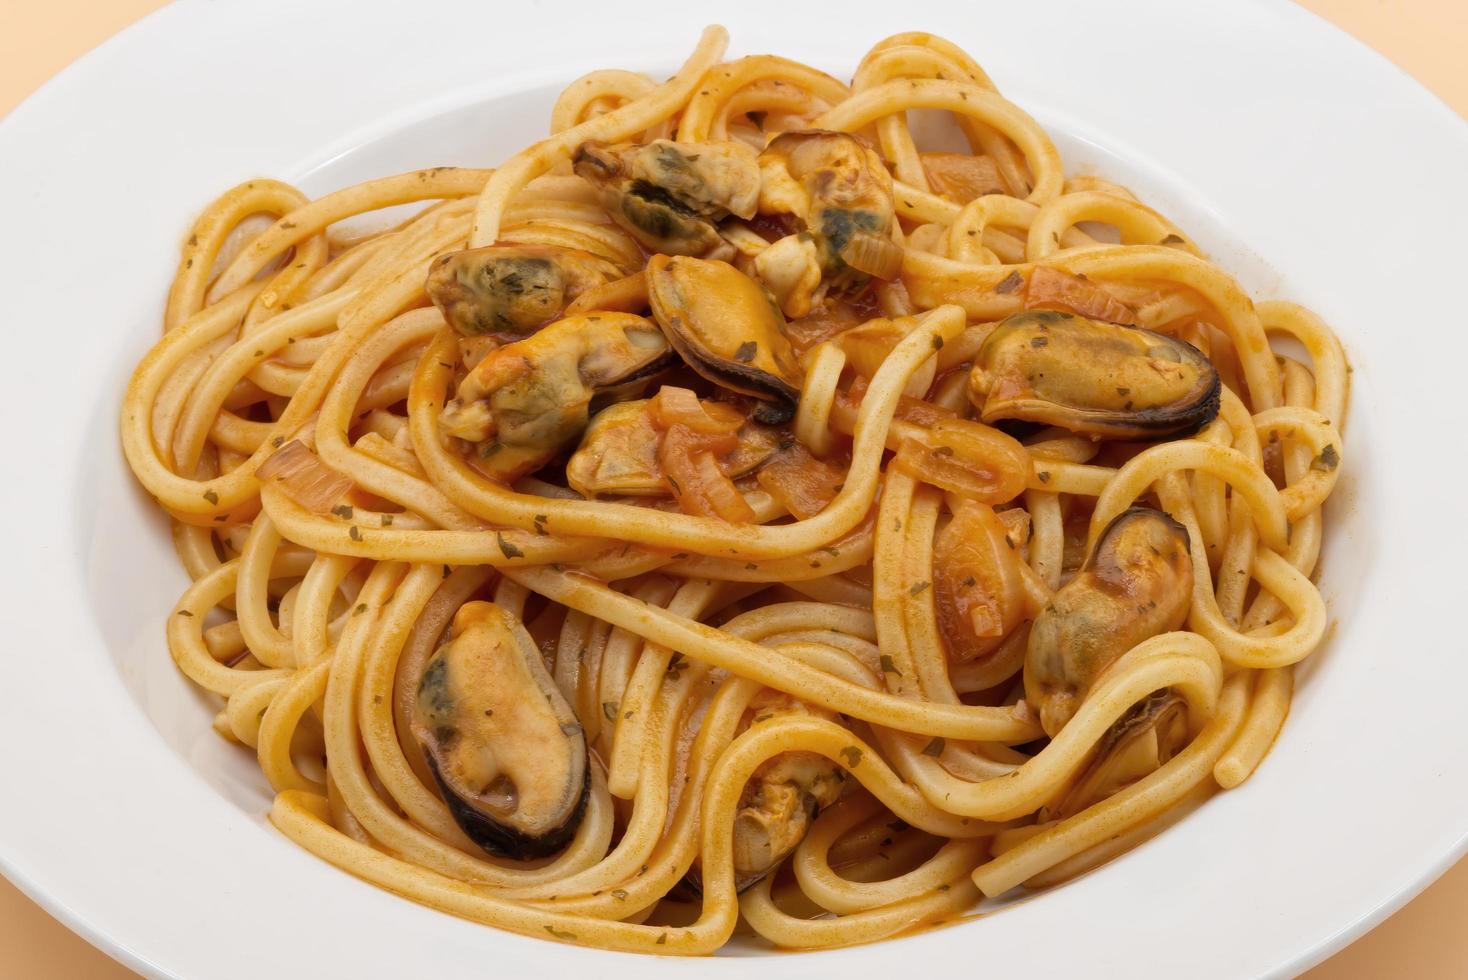 Linguine allo scoglio linguine with seafood Spaghetti allo scoglio spaghetti with seafood. Traditional Italian pasta with mussels. photo